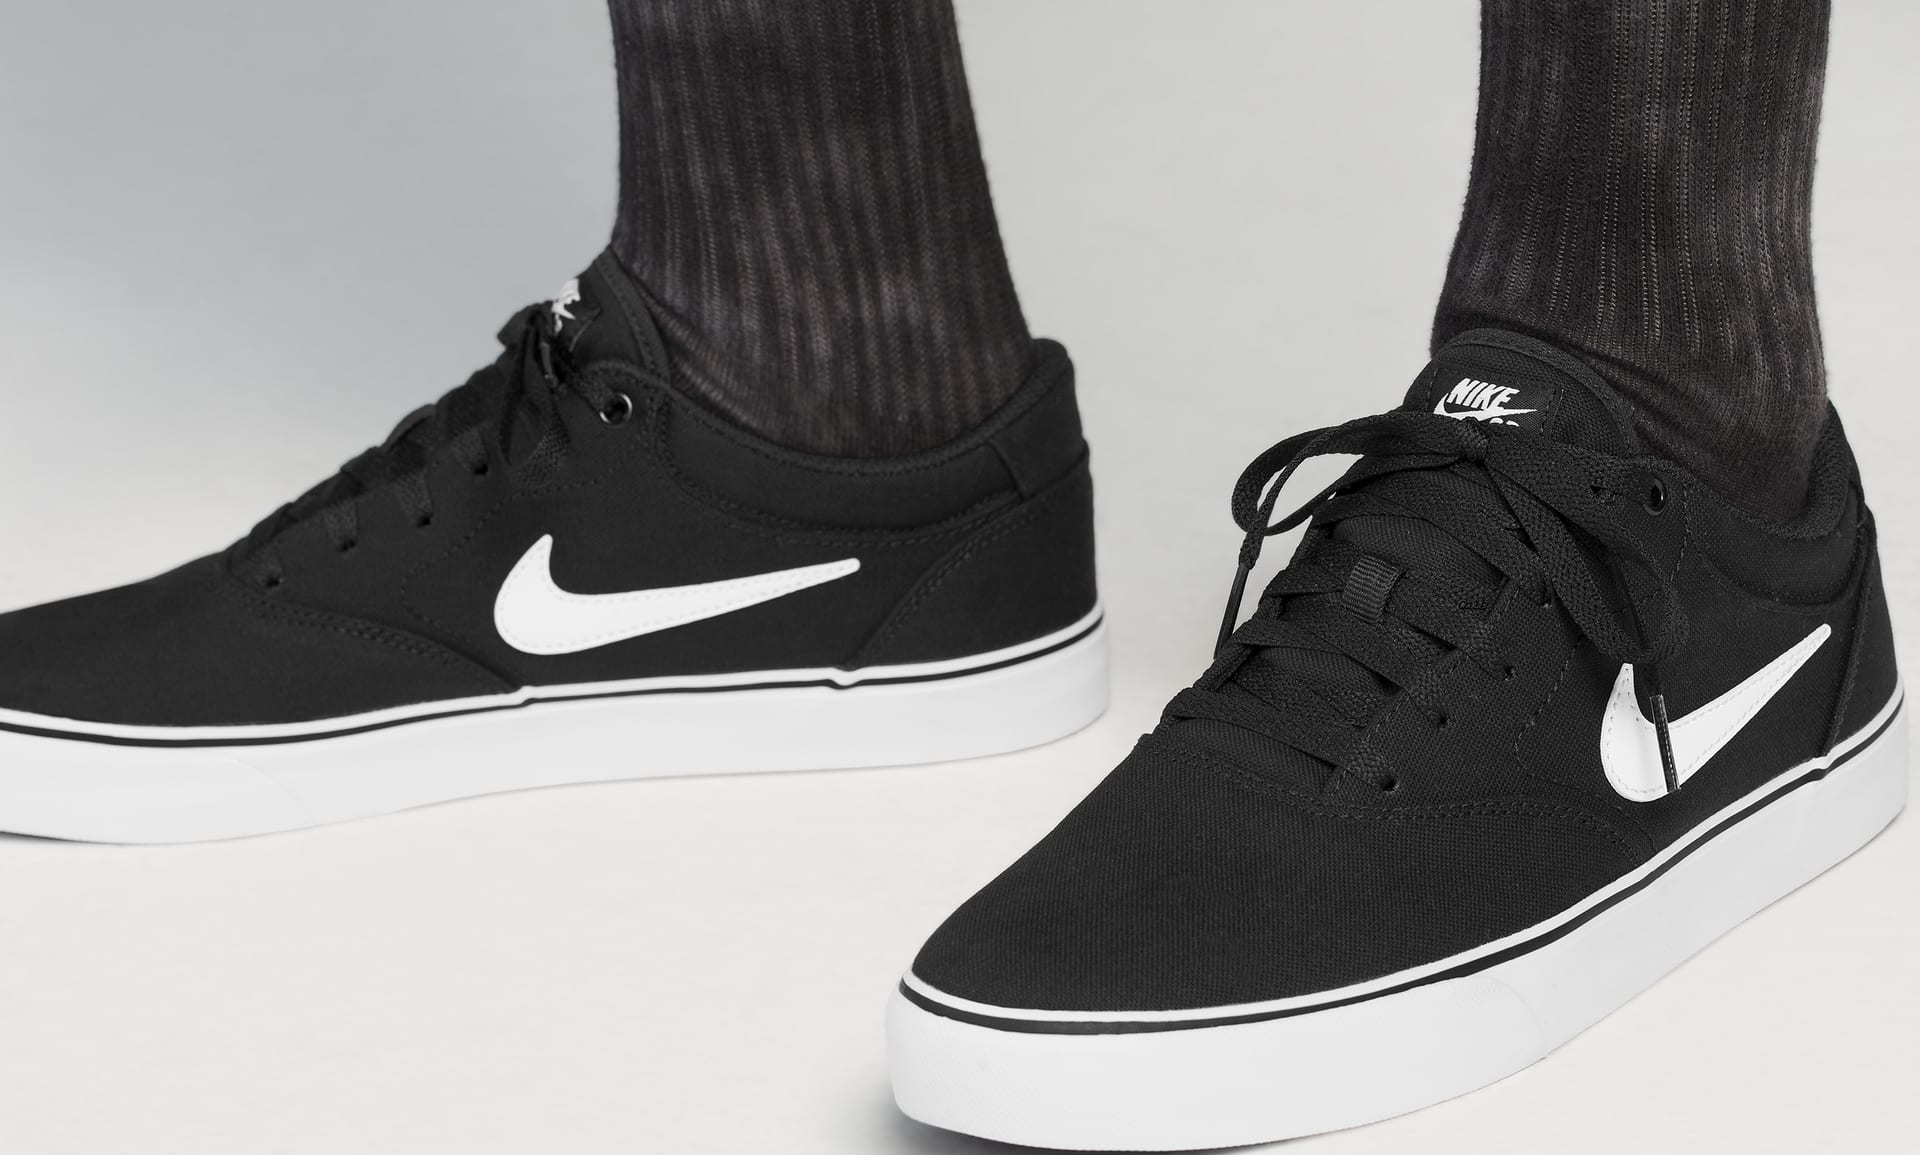 Nike SB Chron 2 Black & Gum Skate Shoes